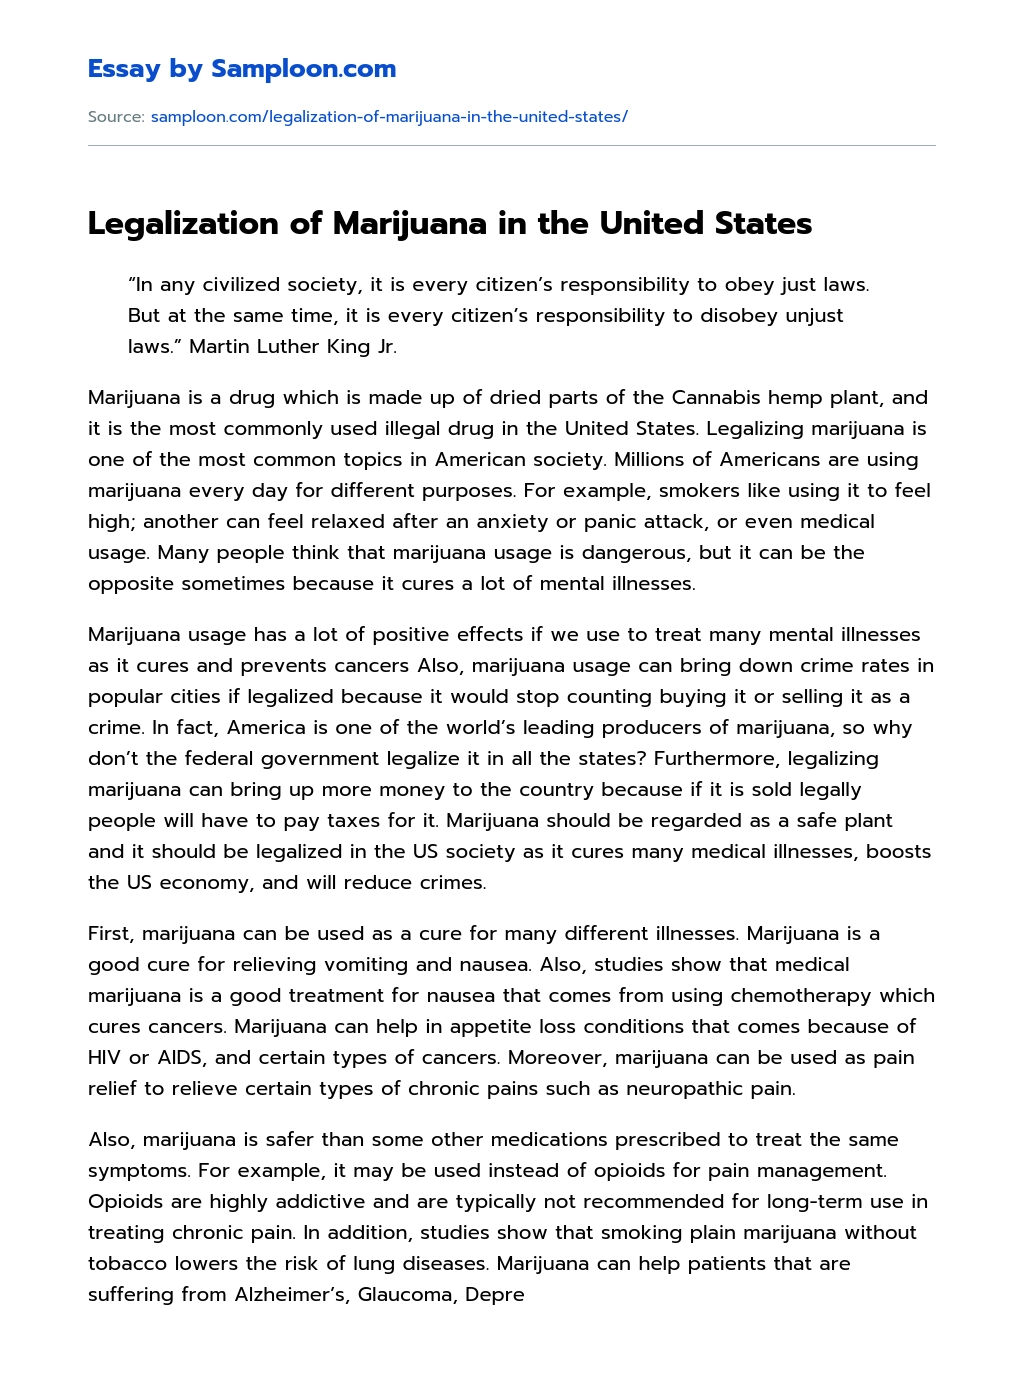 Legalization of Marijuana in the United States essay